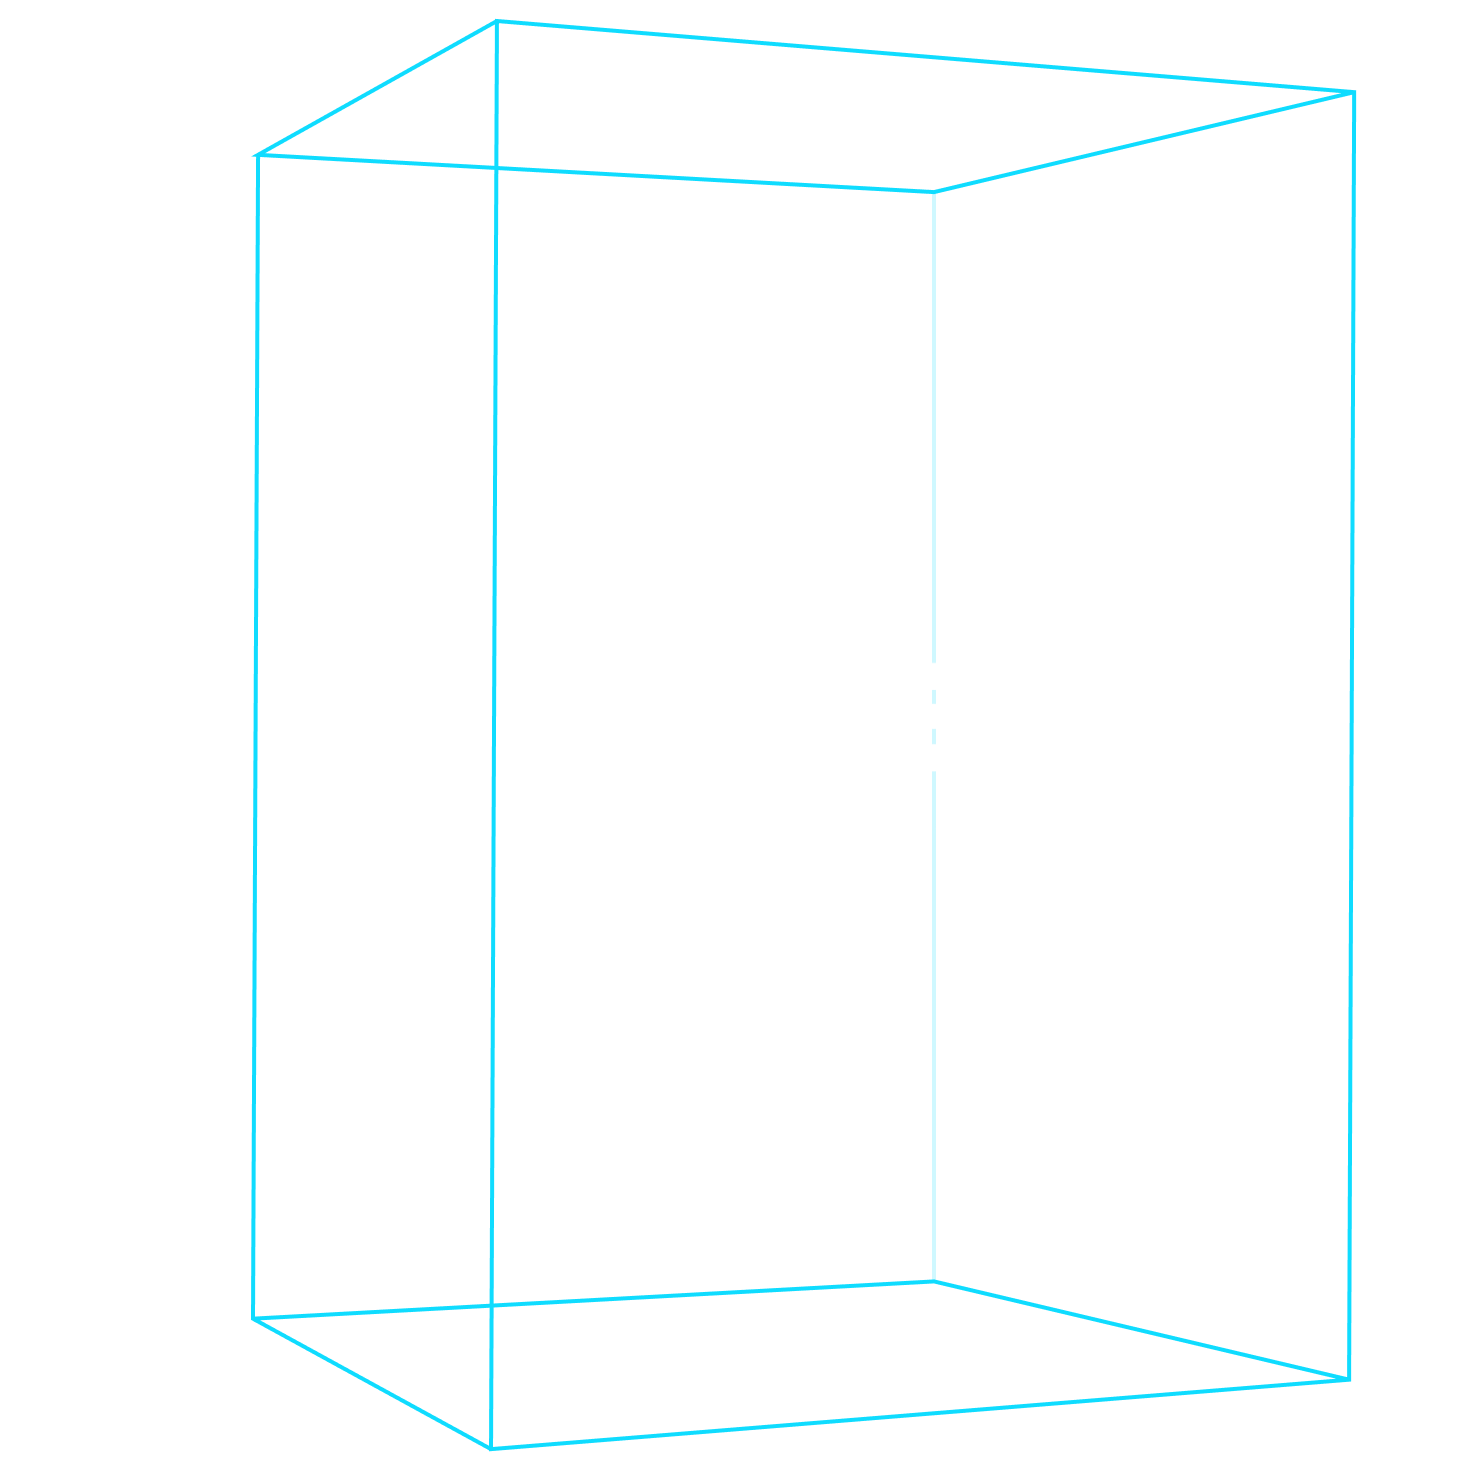 Fierce Telecom logo inside transparent blue cube